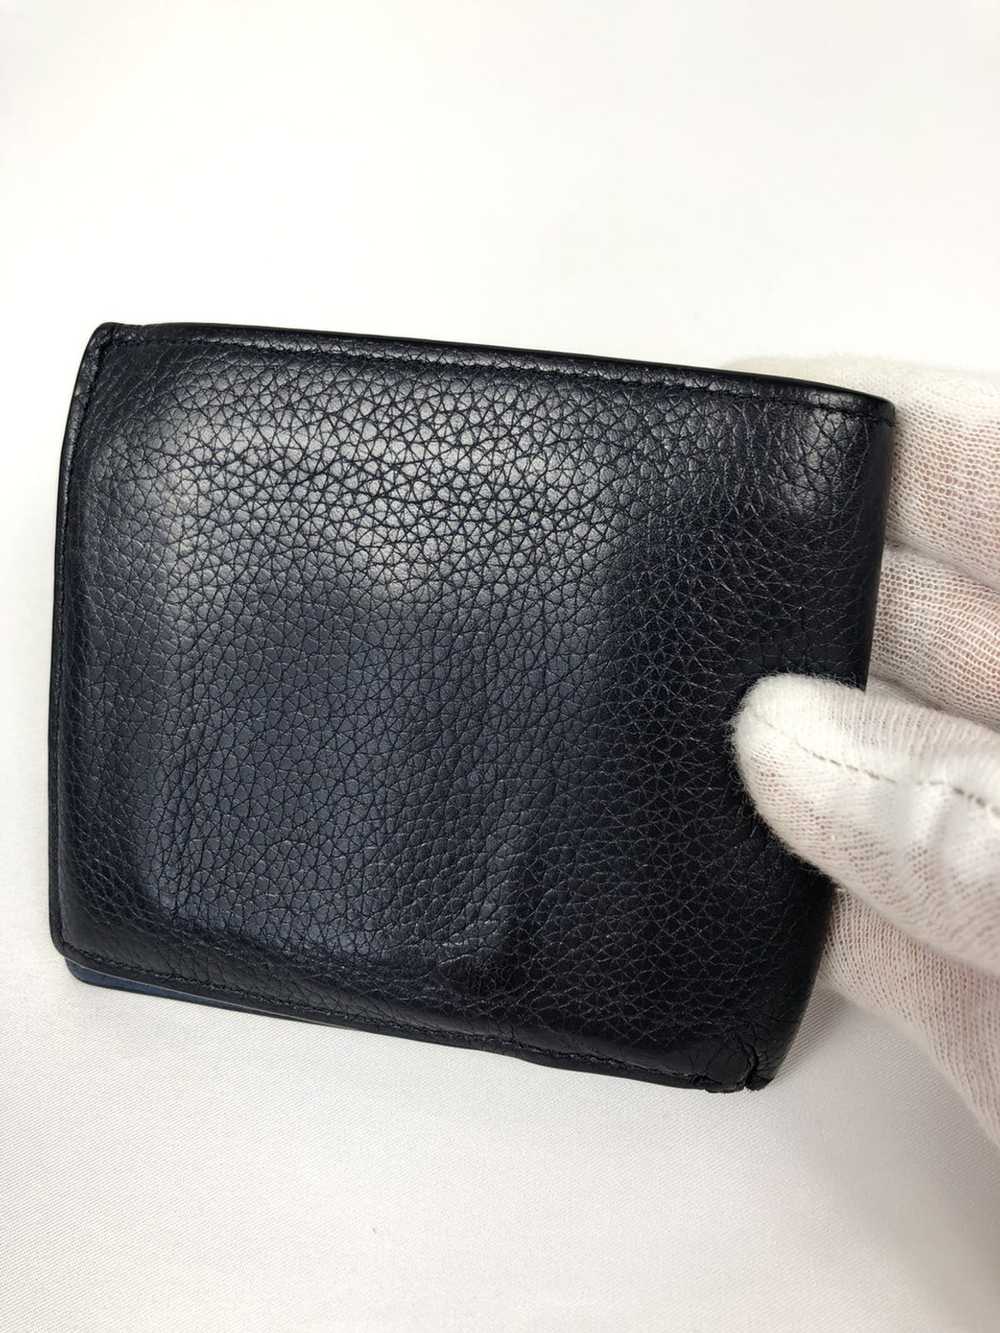 Prada Prada blue leather bifold wallet - image 2